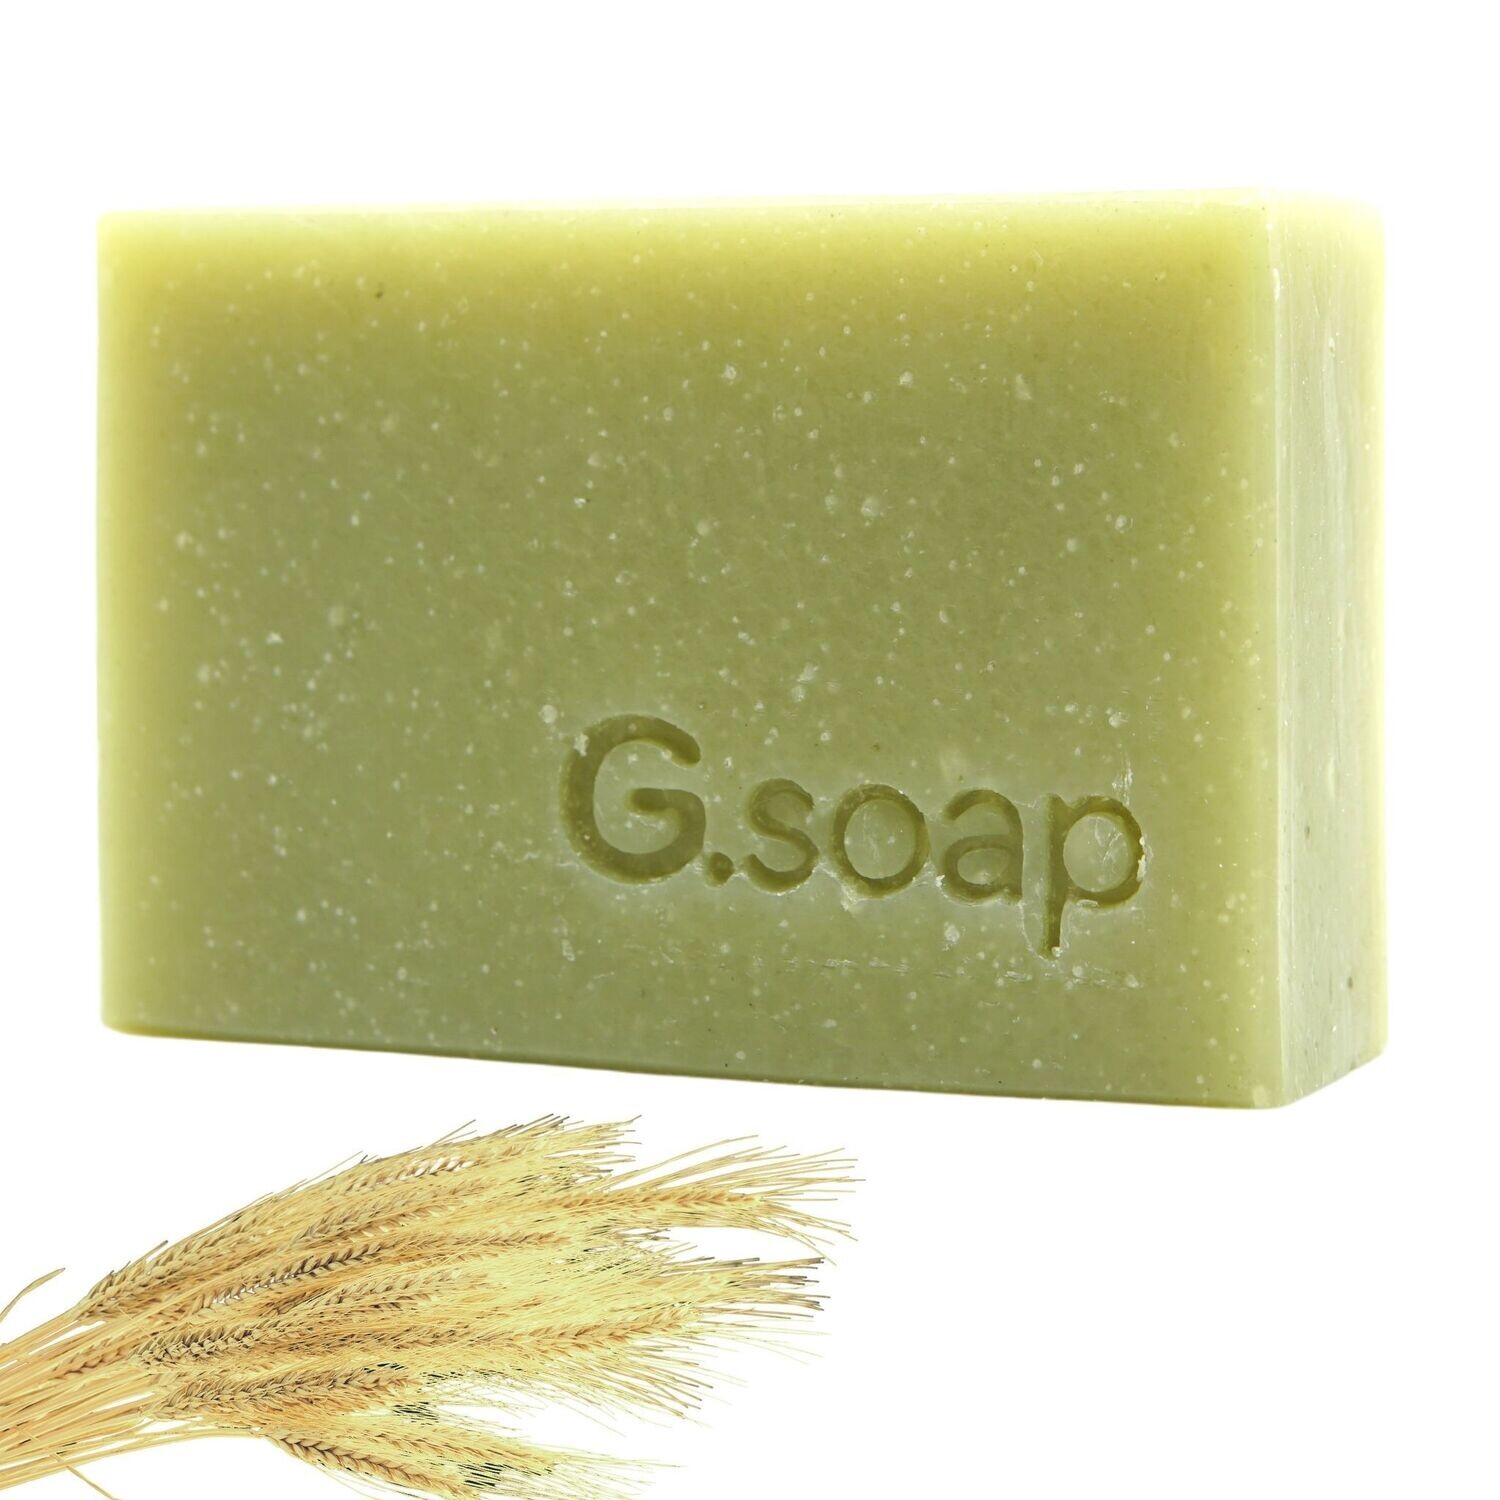 G.soap Boricha Soap Bar